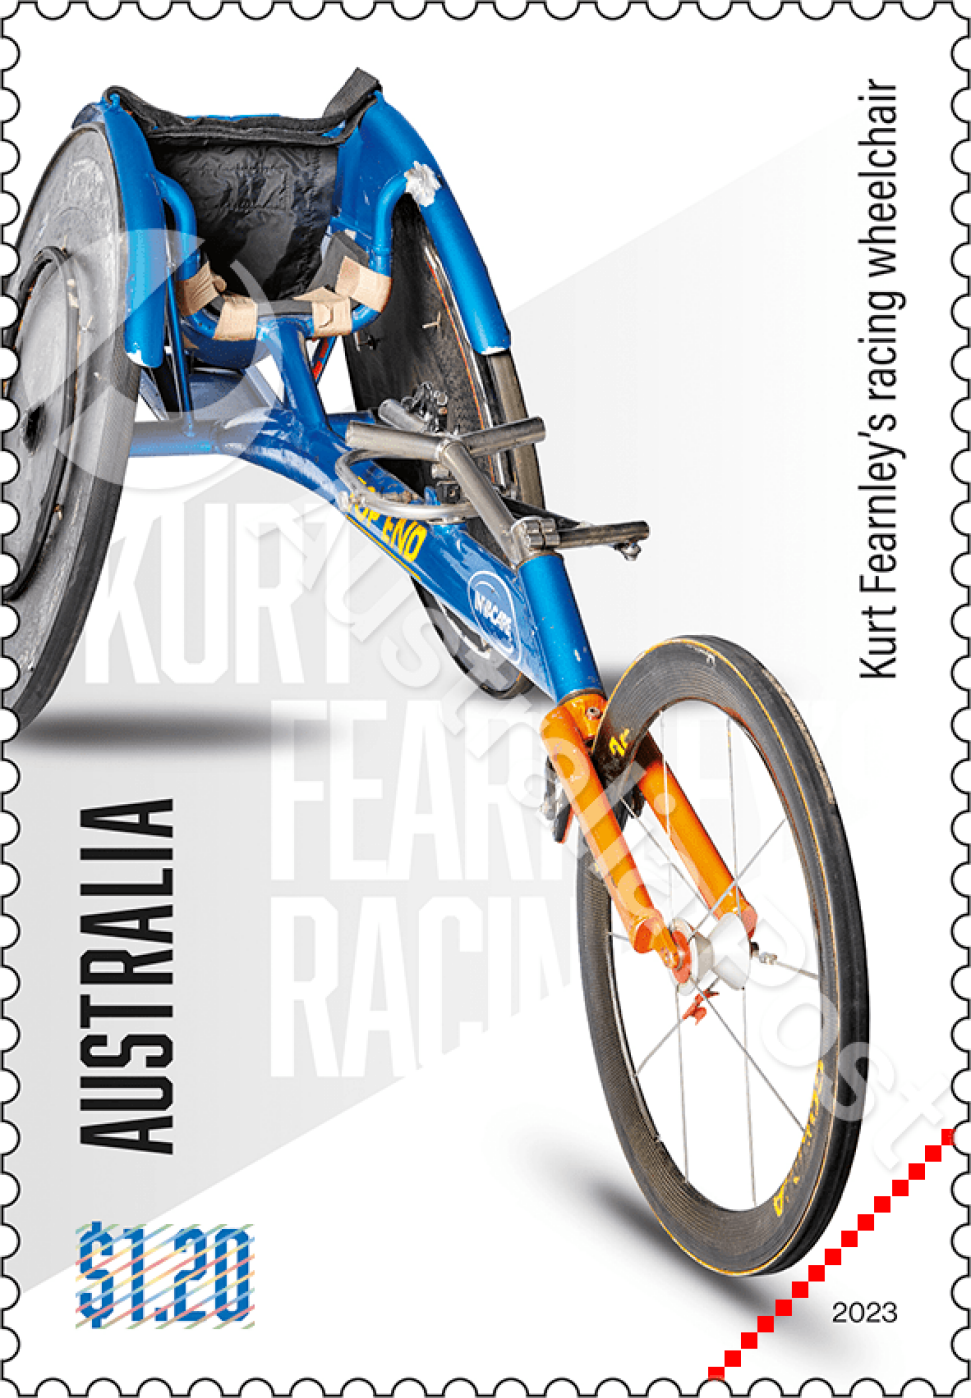 $1.20 Kurt Fearnley’s racing wheelchair